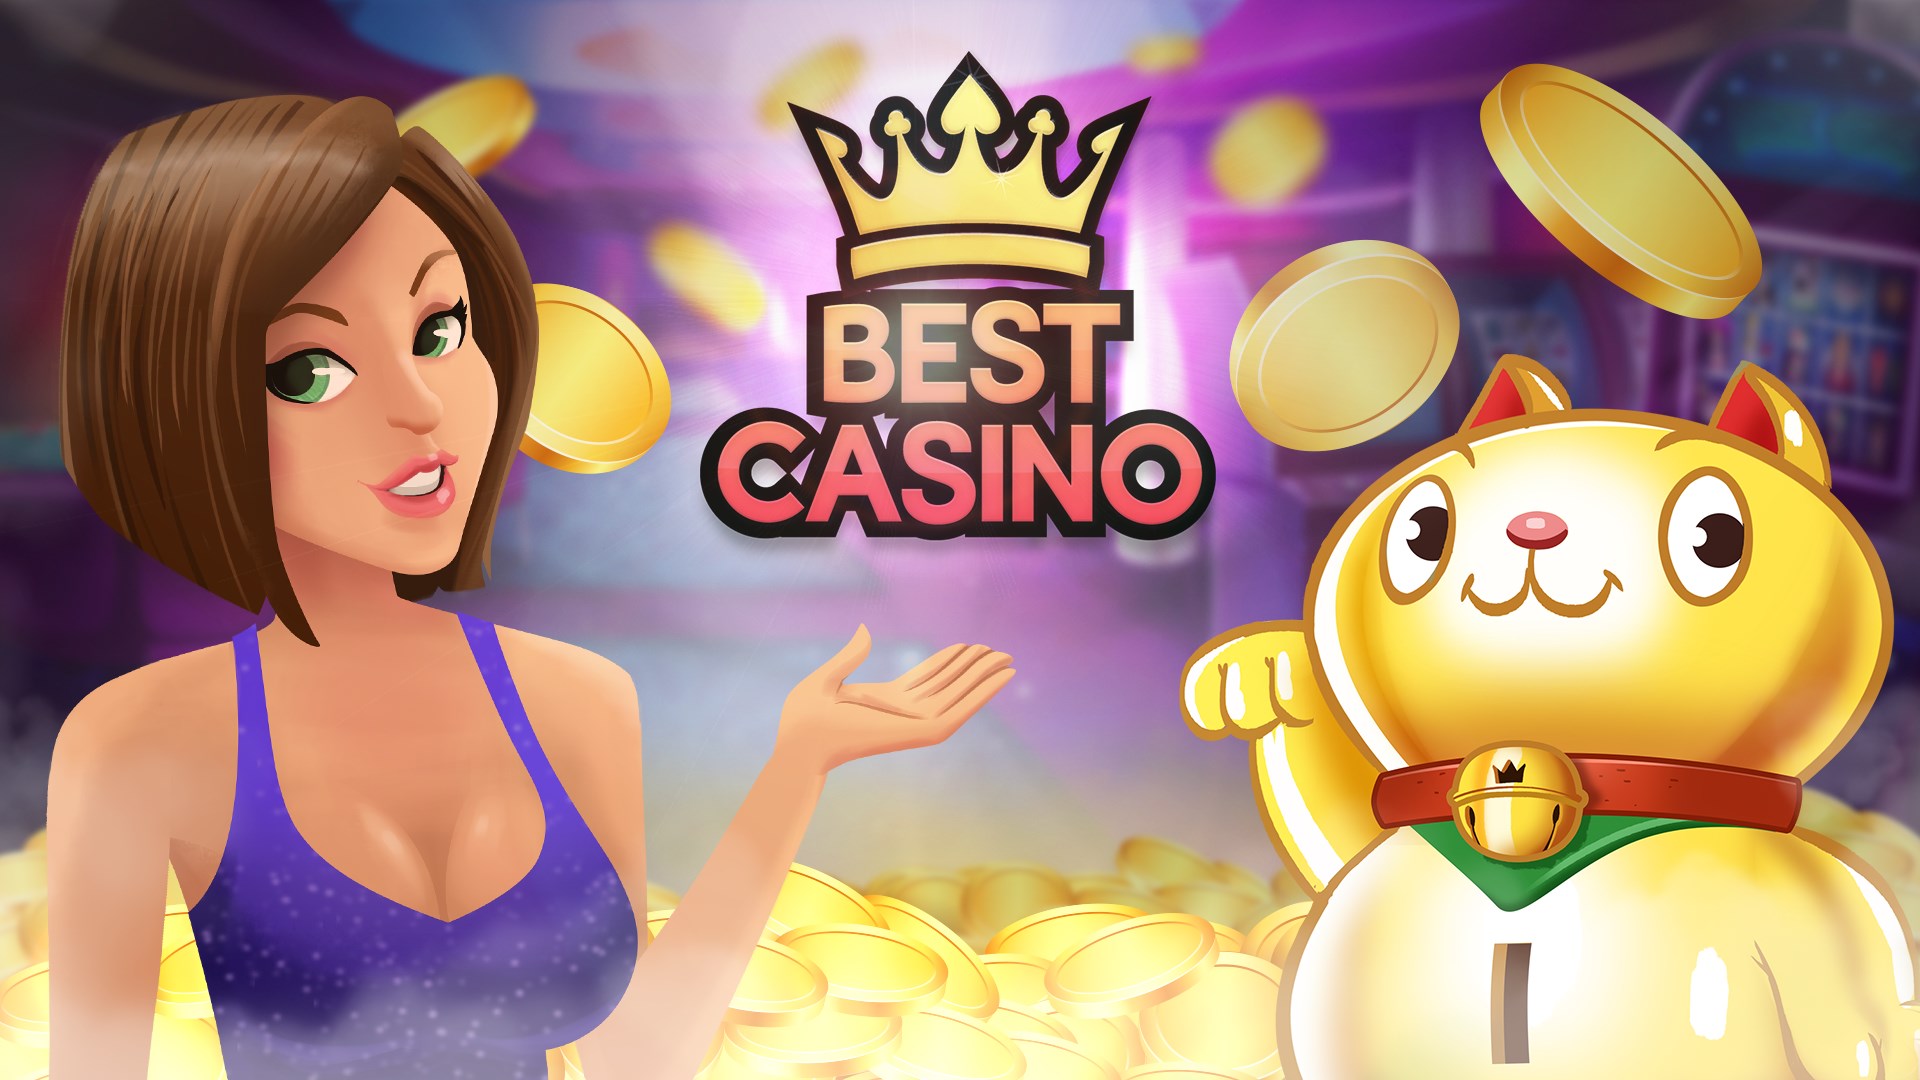 Best Casino Slots Bingo & Poker Free Coins